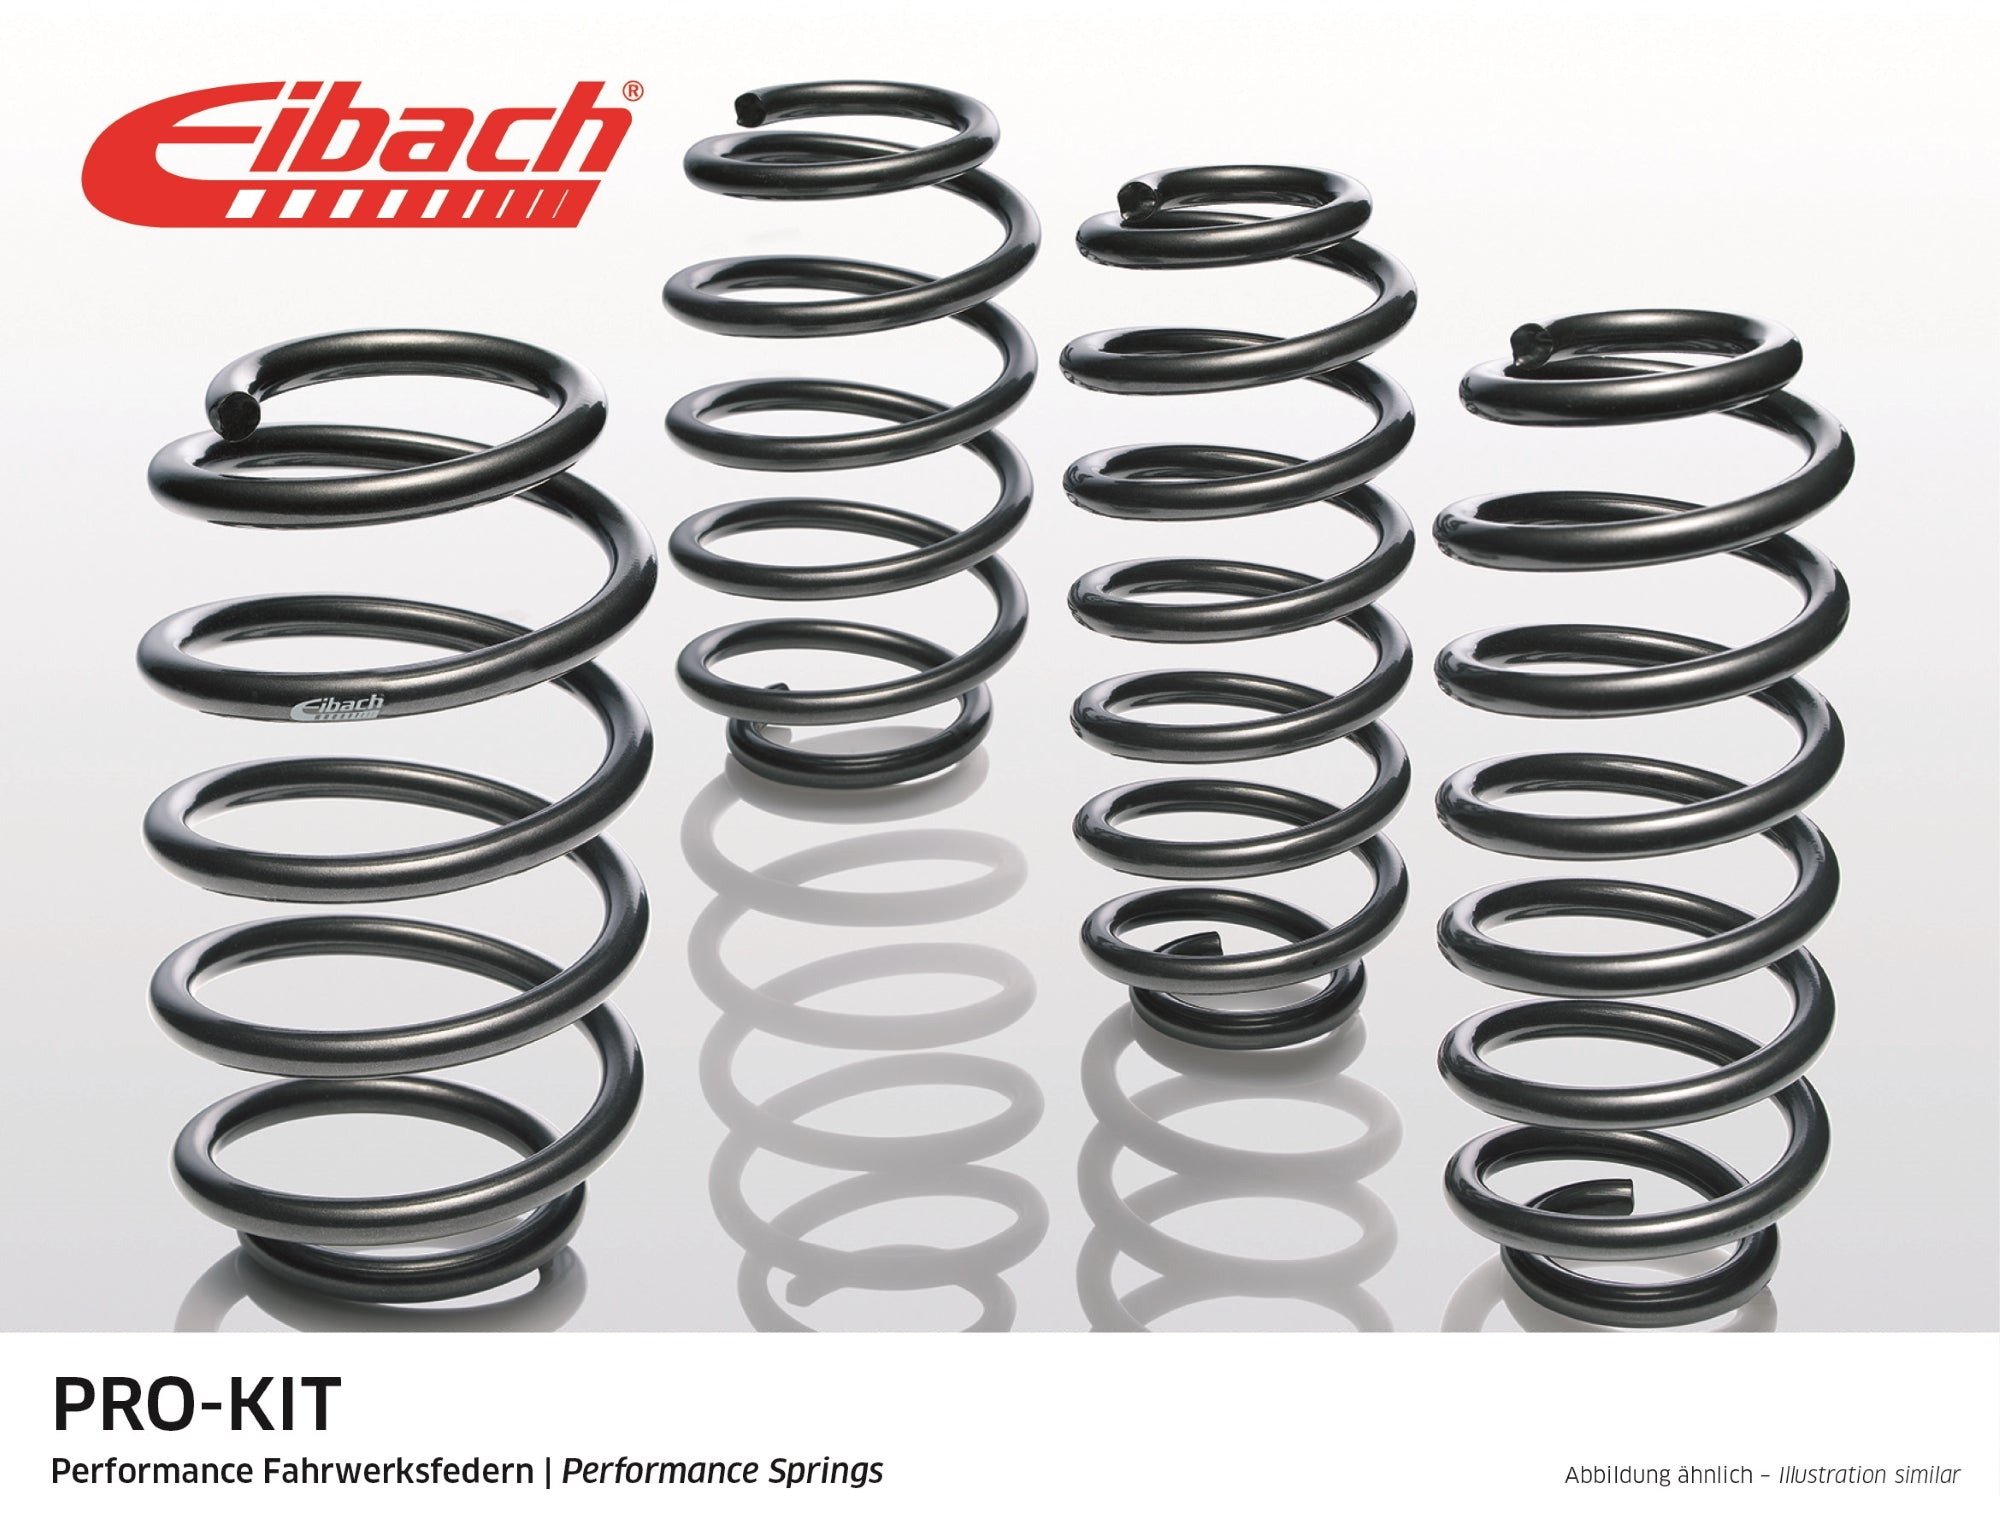 Eibach Suspension Pro-Kit (Performance Springs) Lowering Kit 911 2013-18 #E10-72-012-03-22